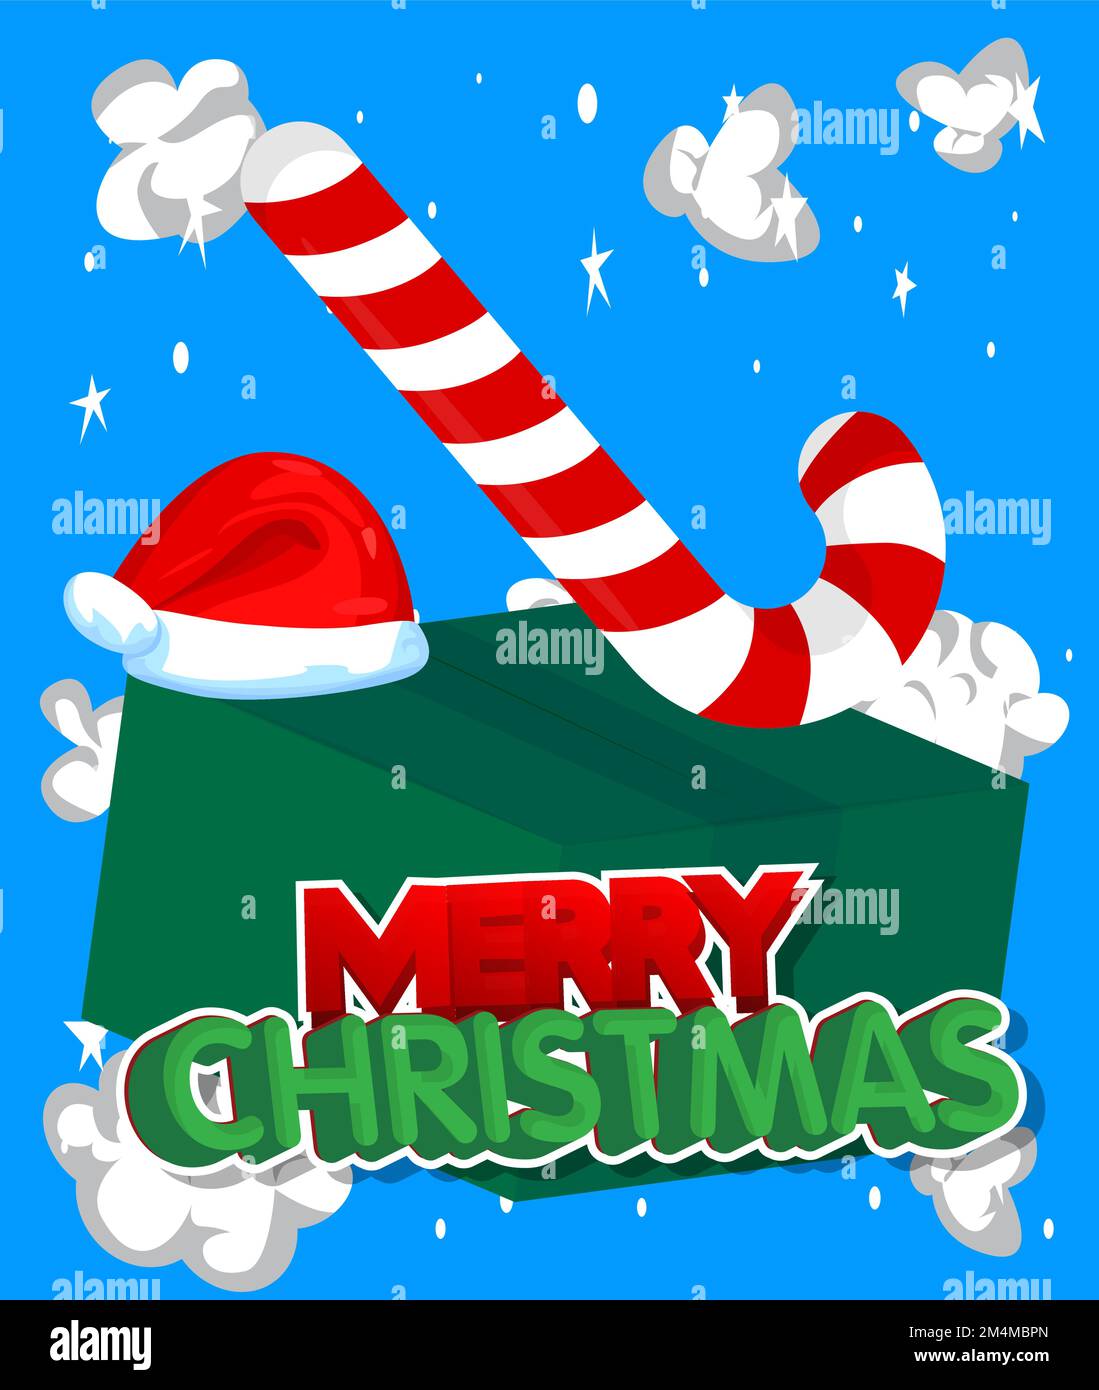 Merry Christmas word with cardboard box. Vector cartoon folded card box illustration. Stock Vector